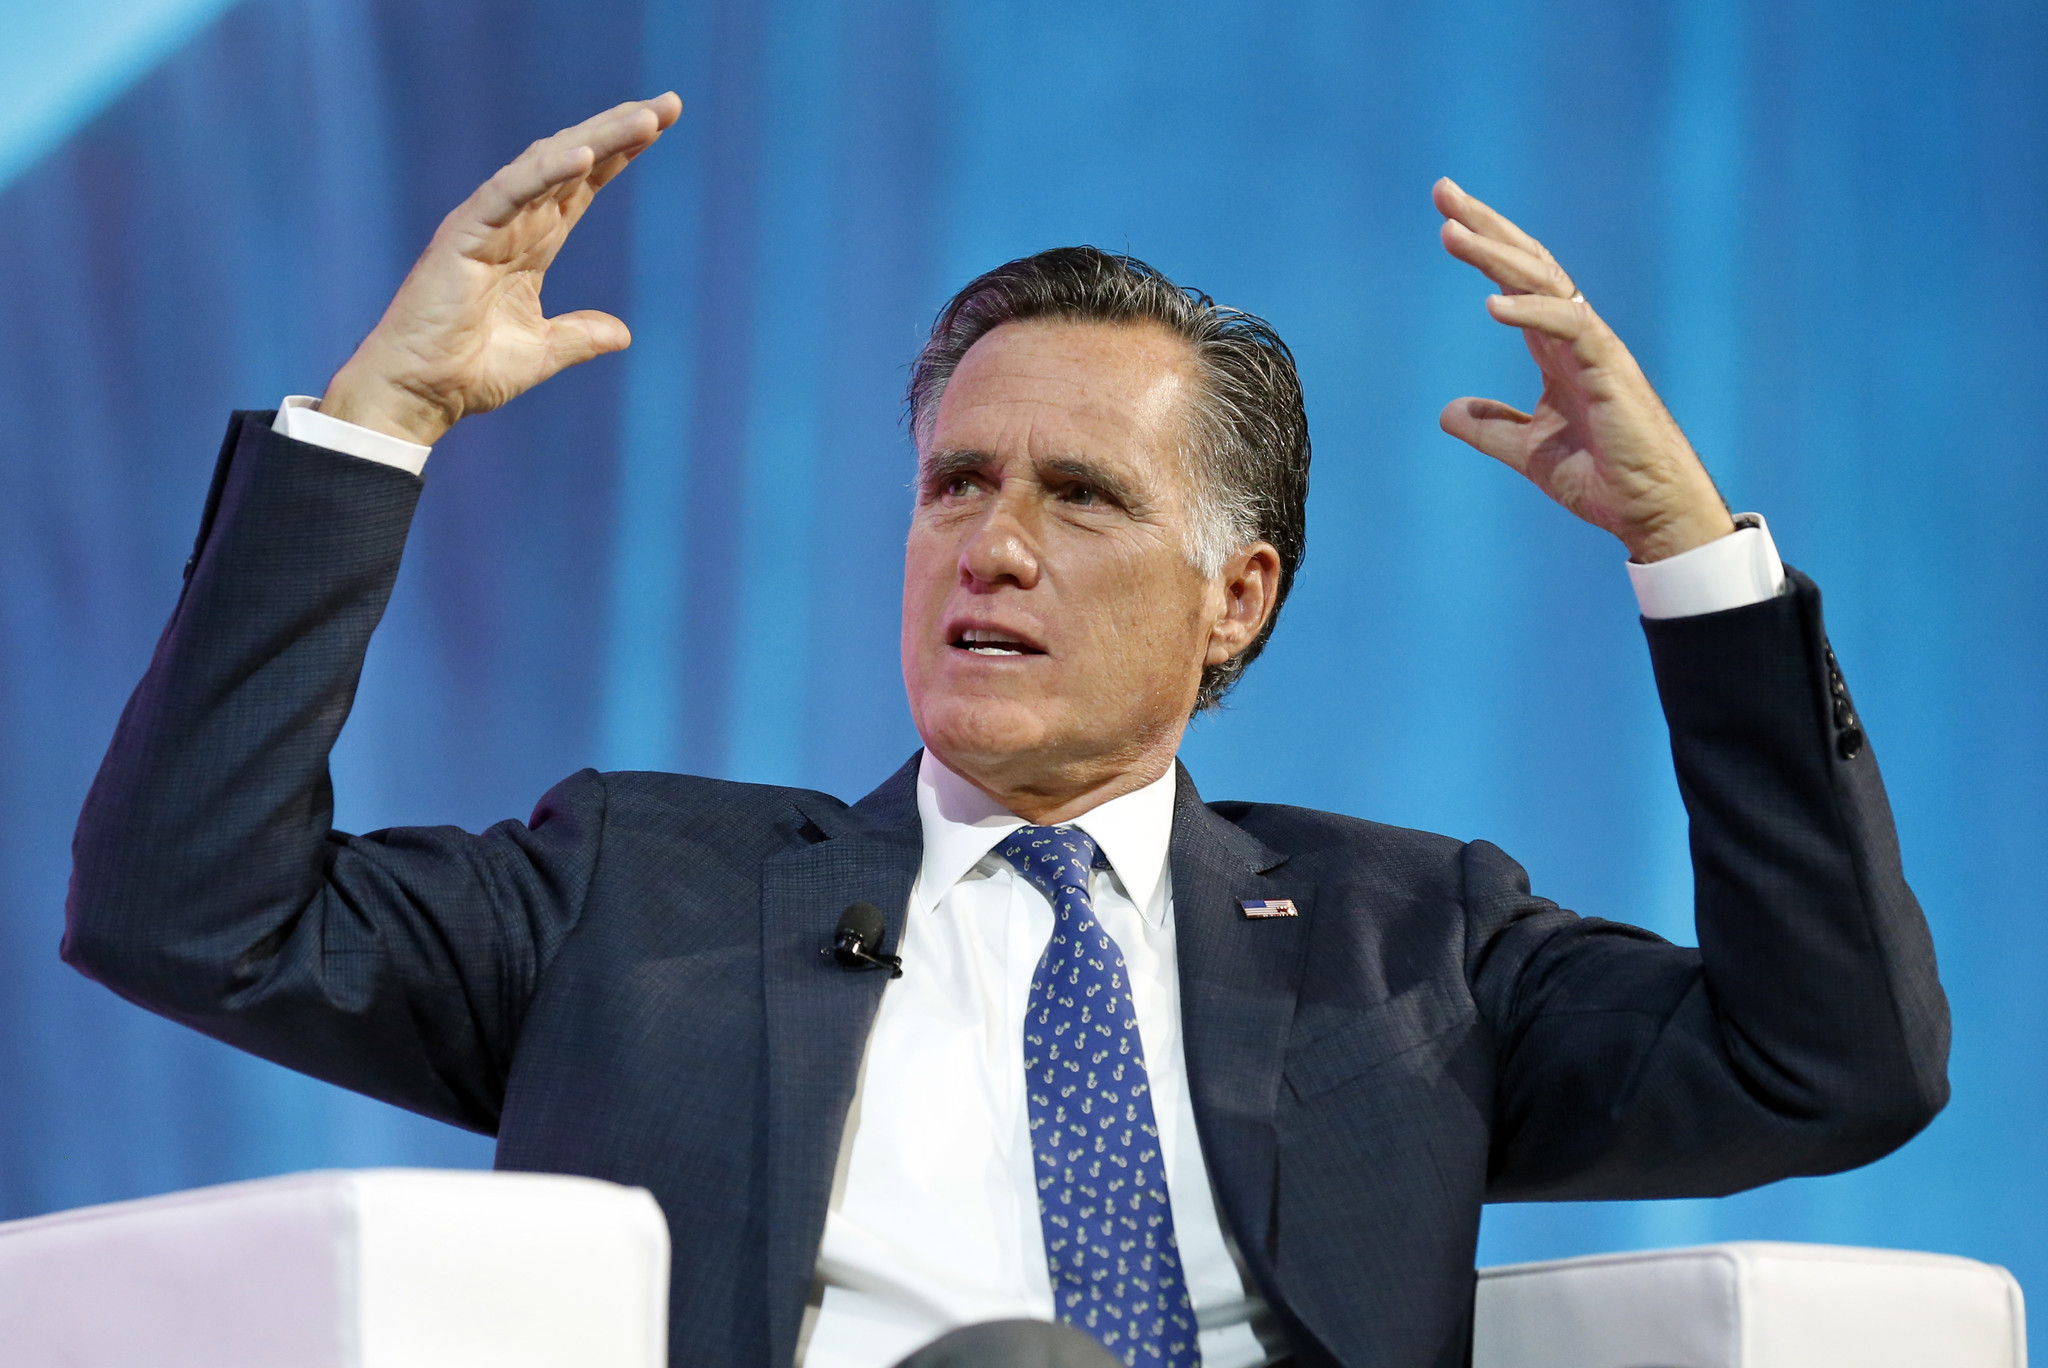 Mitt Romney to launch U.S. Senate campaign Thursday in Utah - Orlando Sentinel2048 x 1368